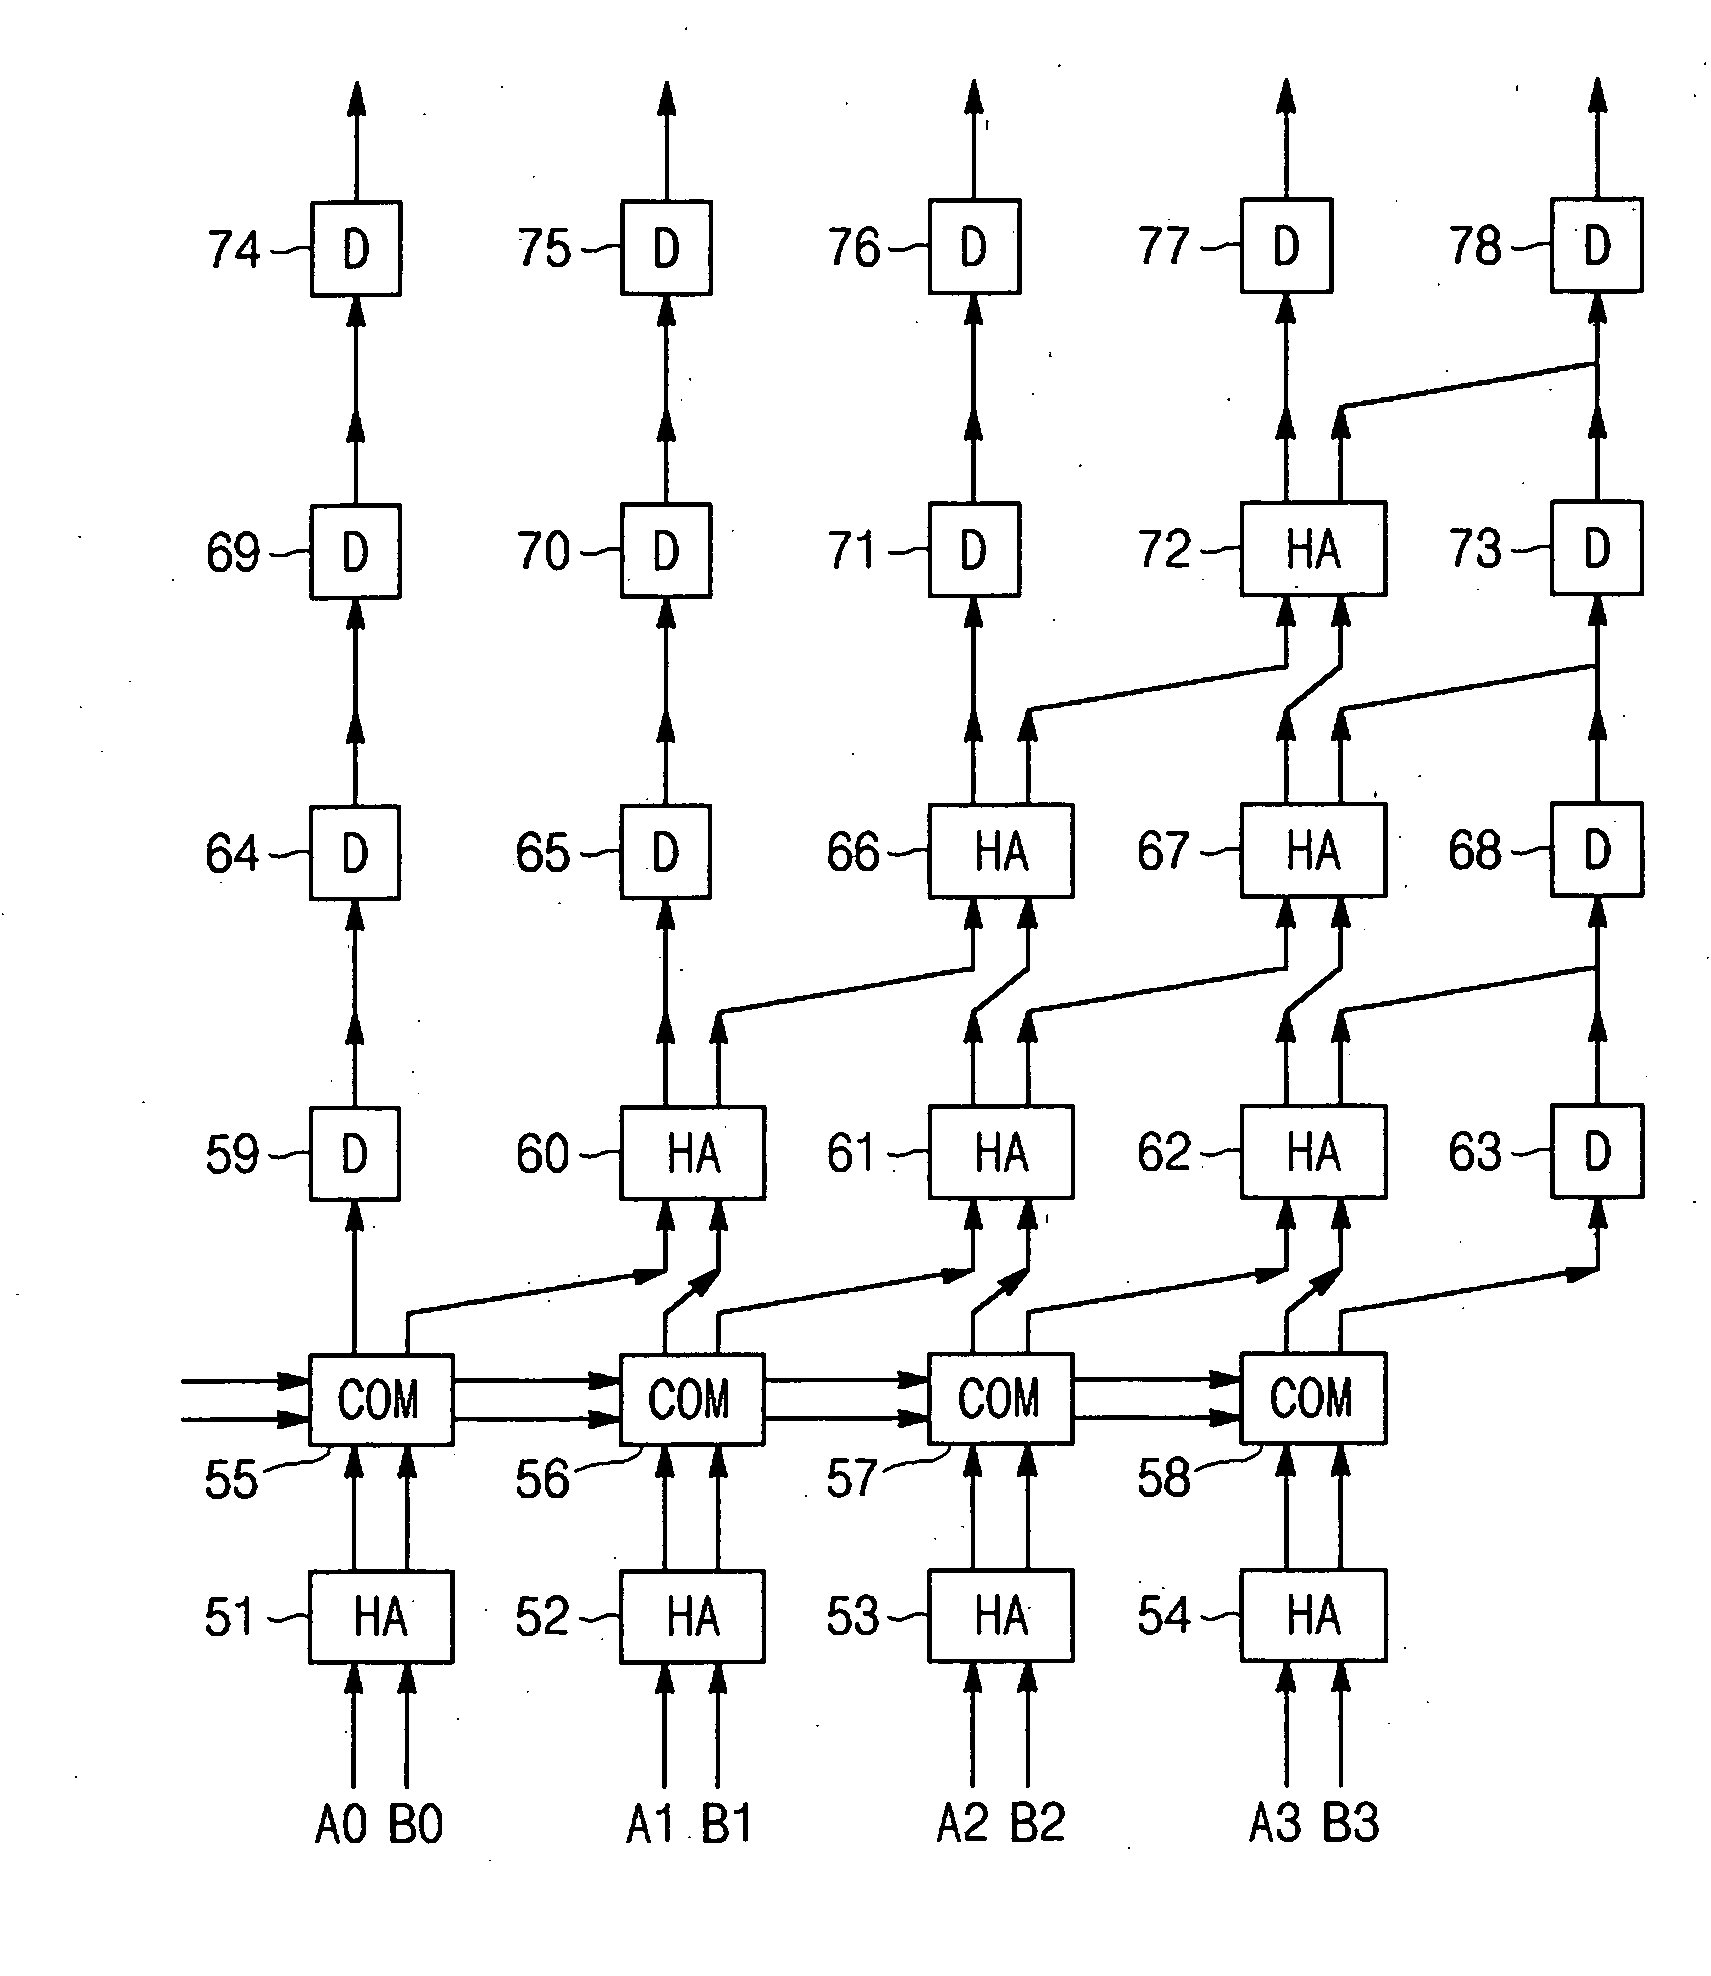 Arithmetic and logic unit using half adder